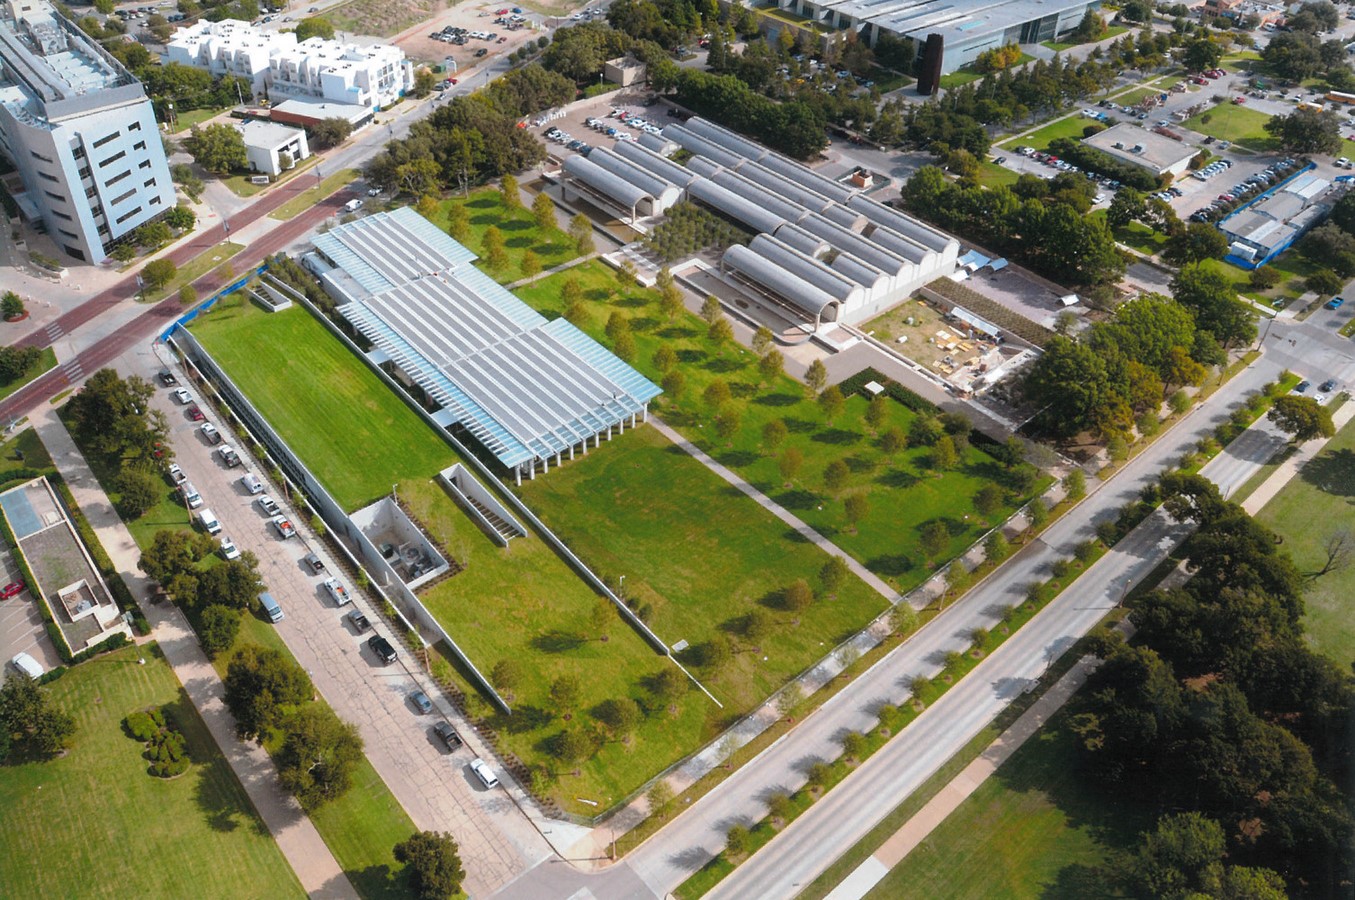 Kimbell Art Museum by Renzo Piano: Mecca of modern architecture - Sheet2